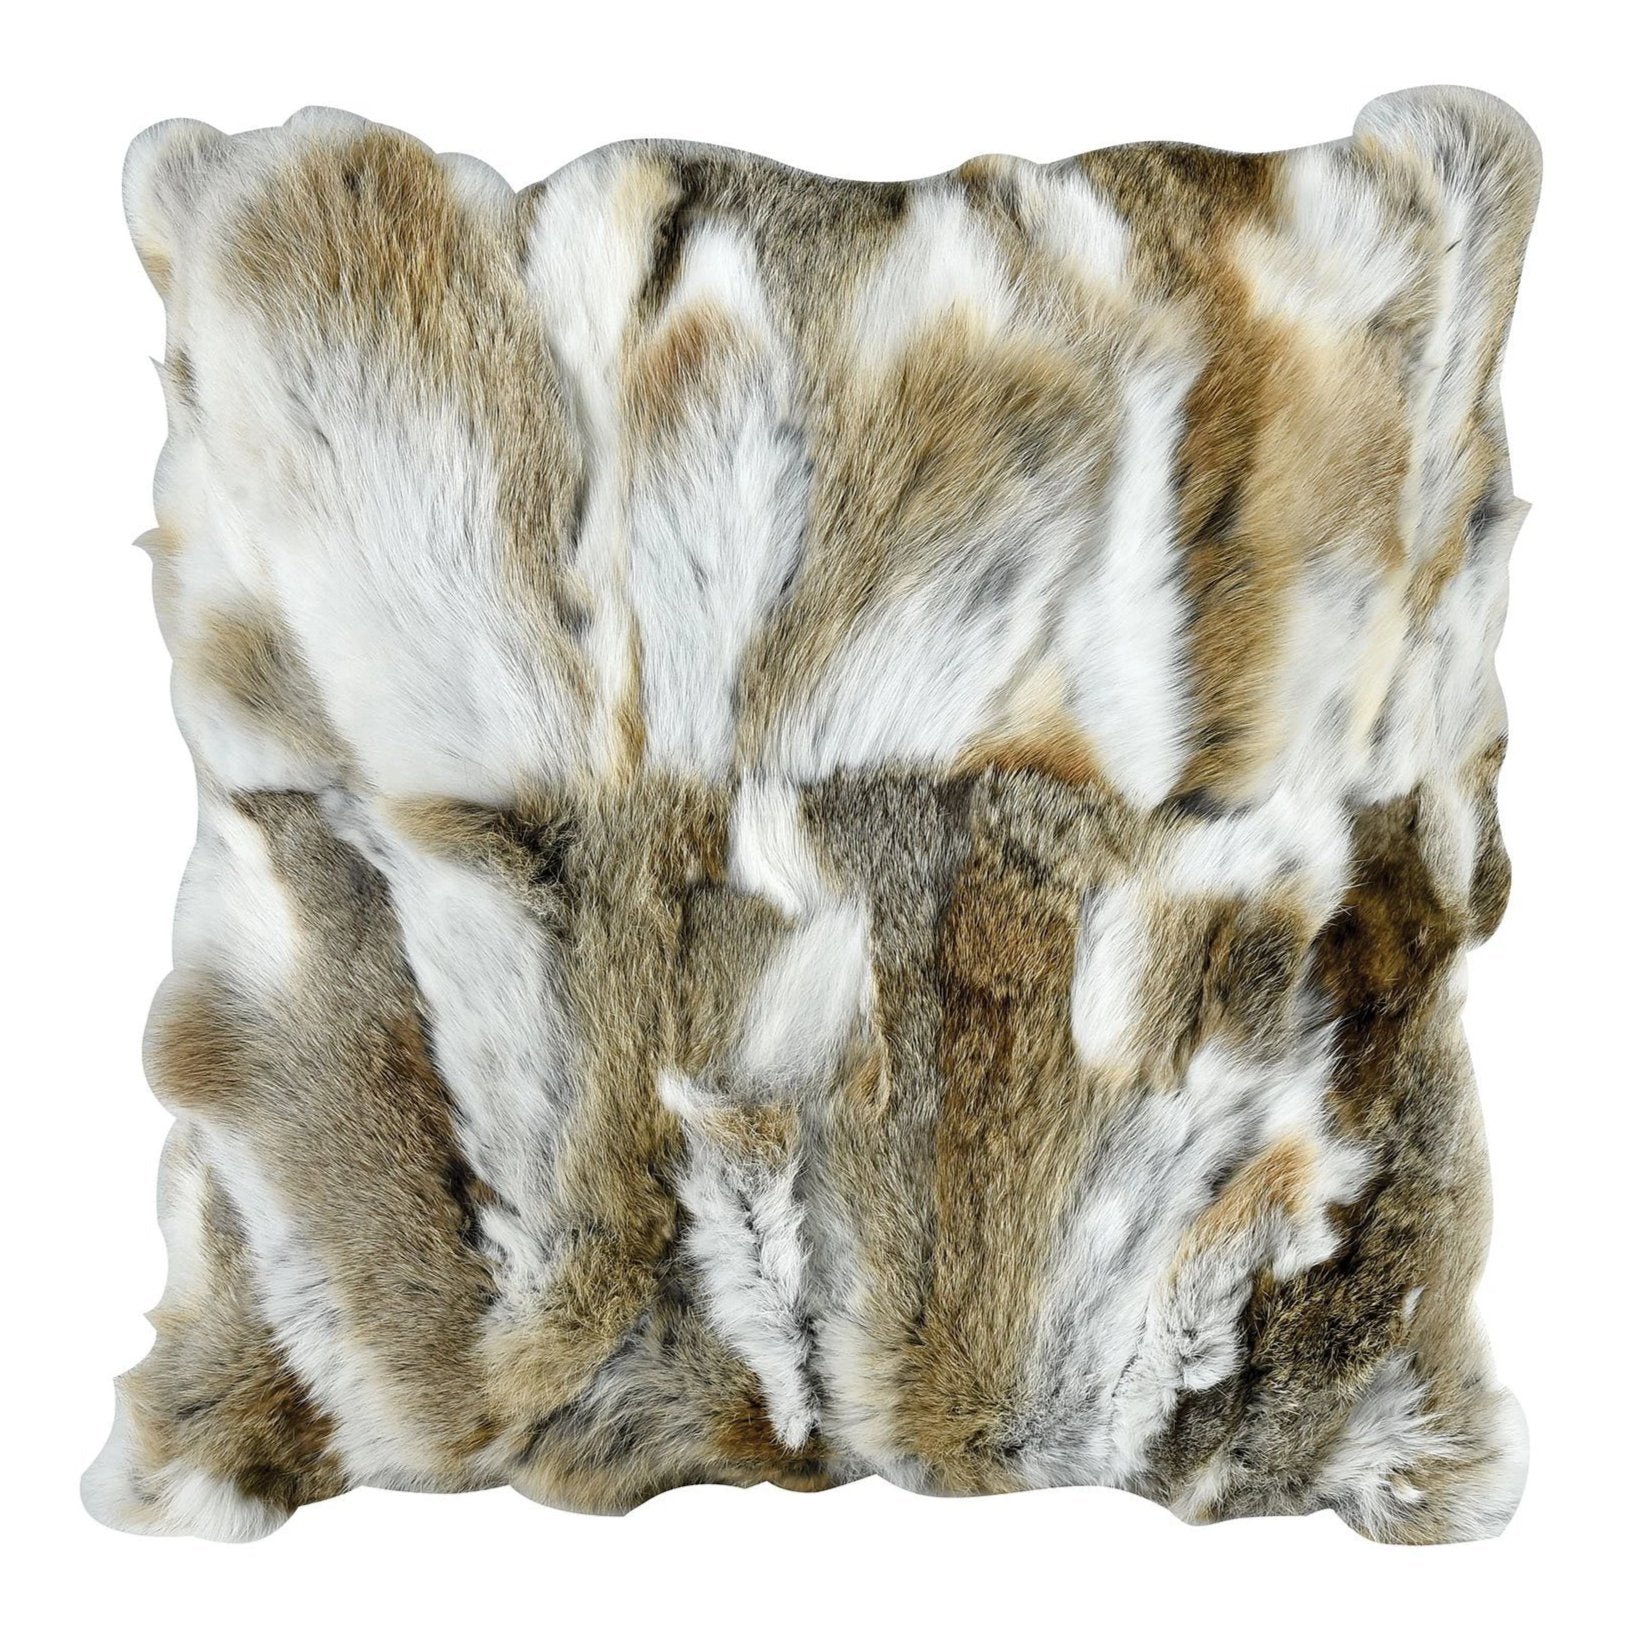 Heavy Petting Genuine Rabbit Fur Lumbar Pillow in Natural Brown Accessories Dimond Home 